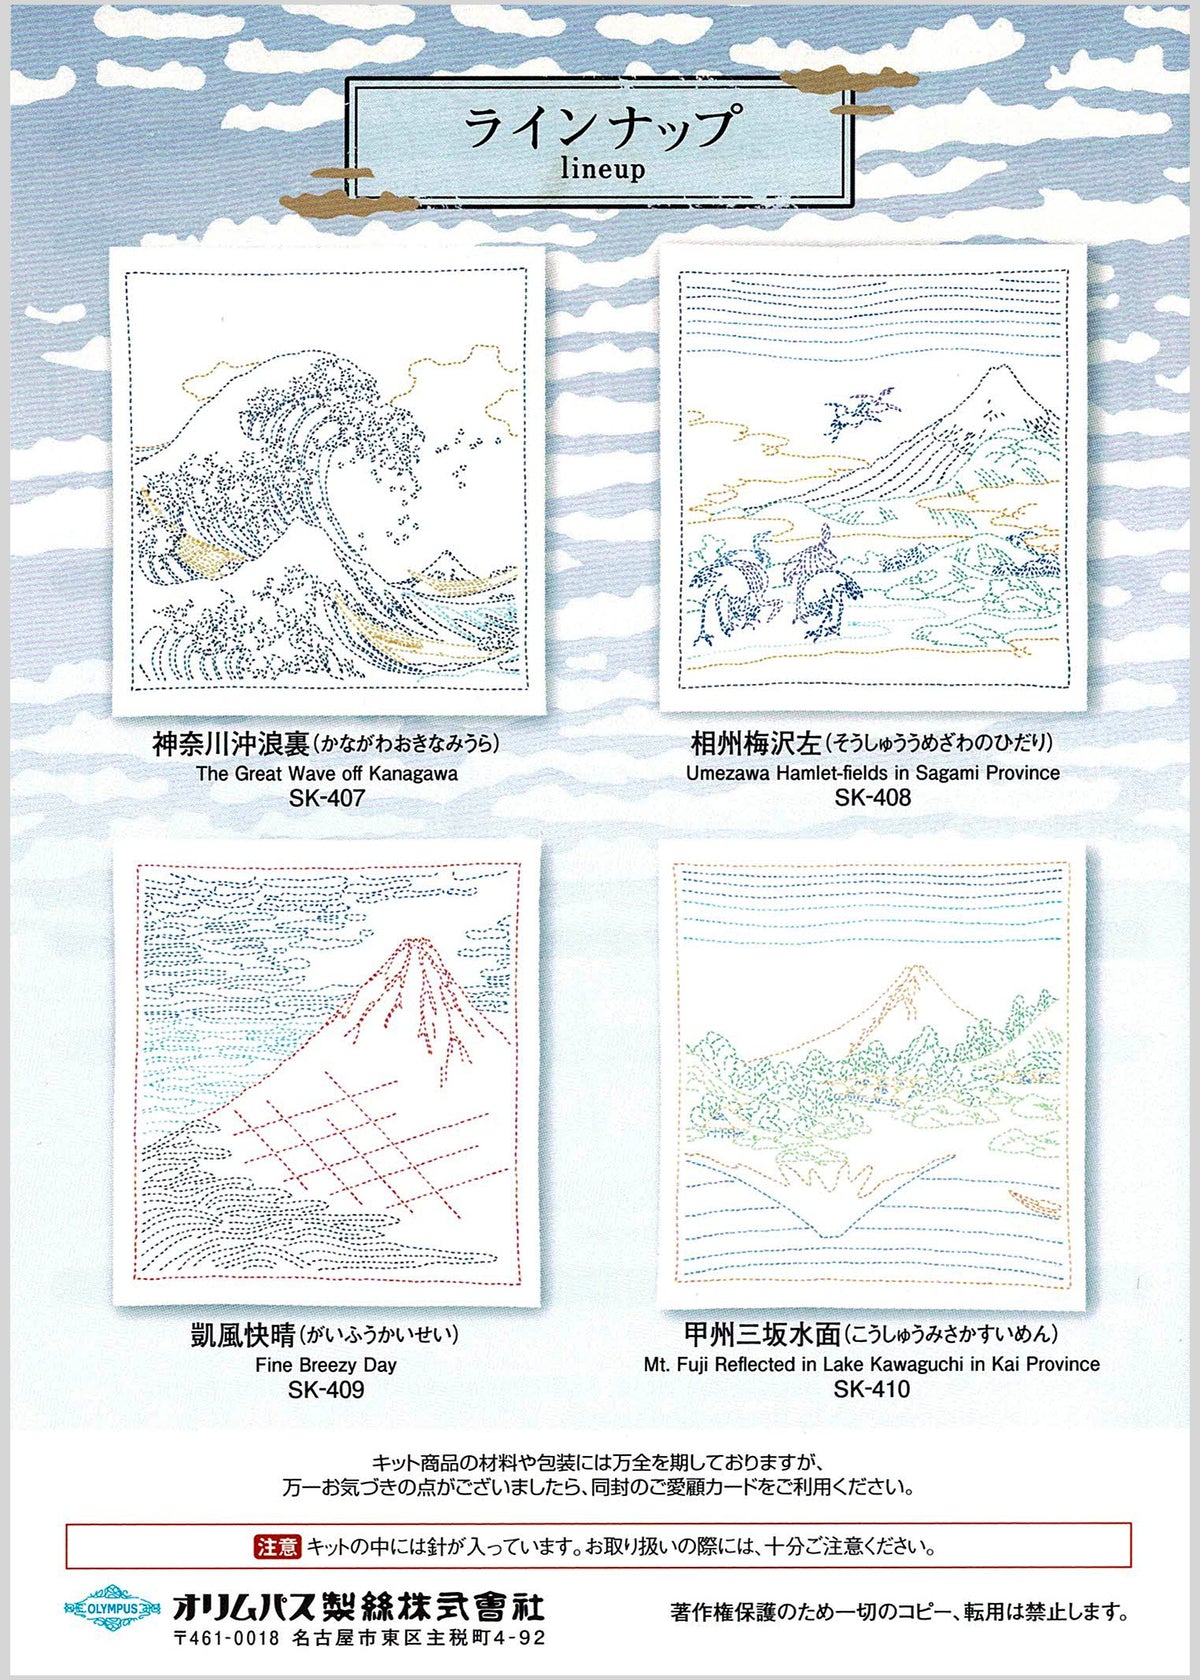 Views of Mt. Fuji Sashiko Embroidery Kit - Seven Cranes